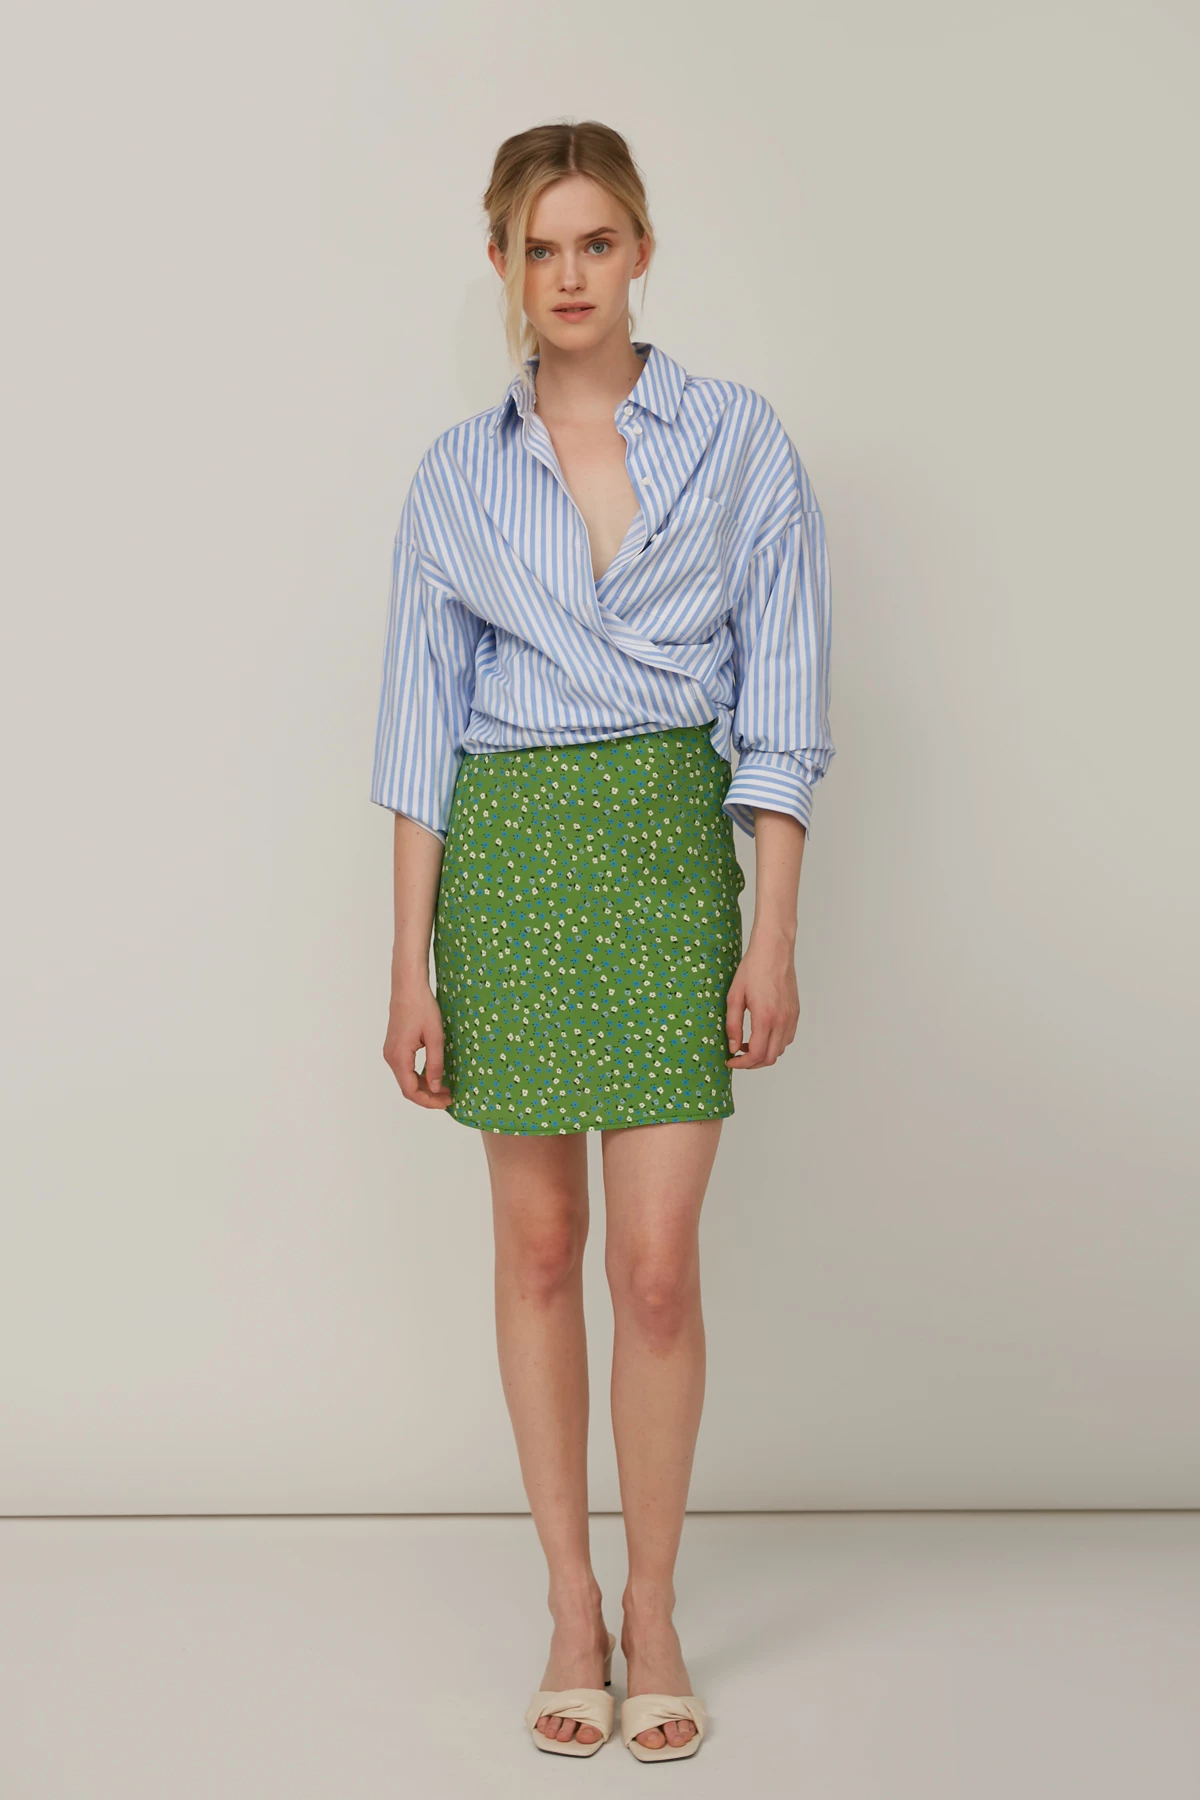 Green raylon mini skirt with white flowers print, photo 2